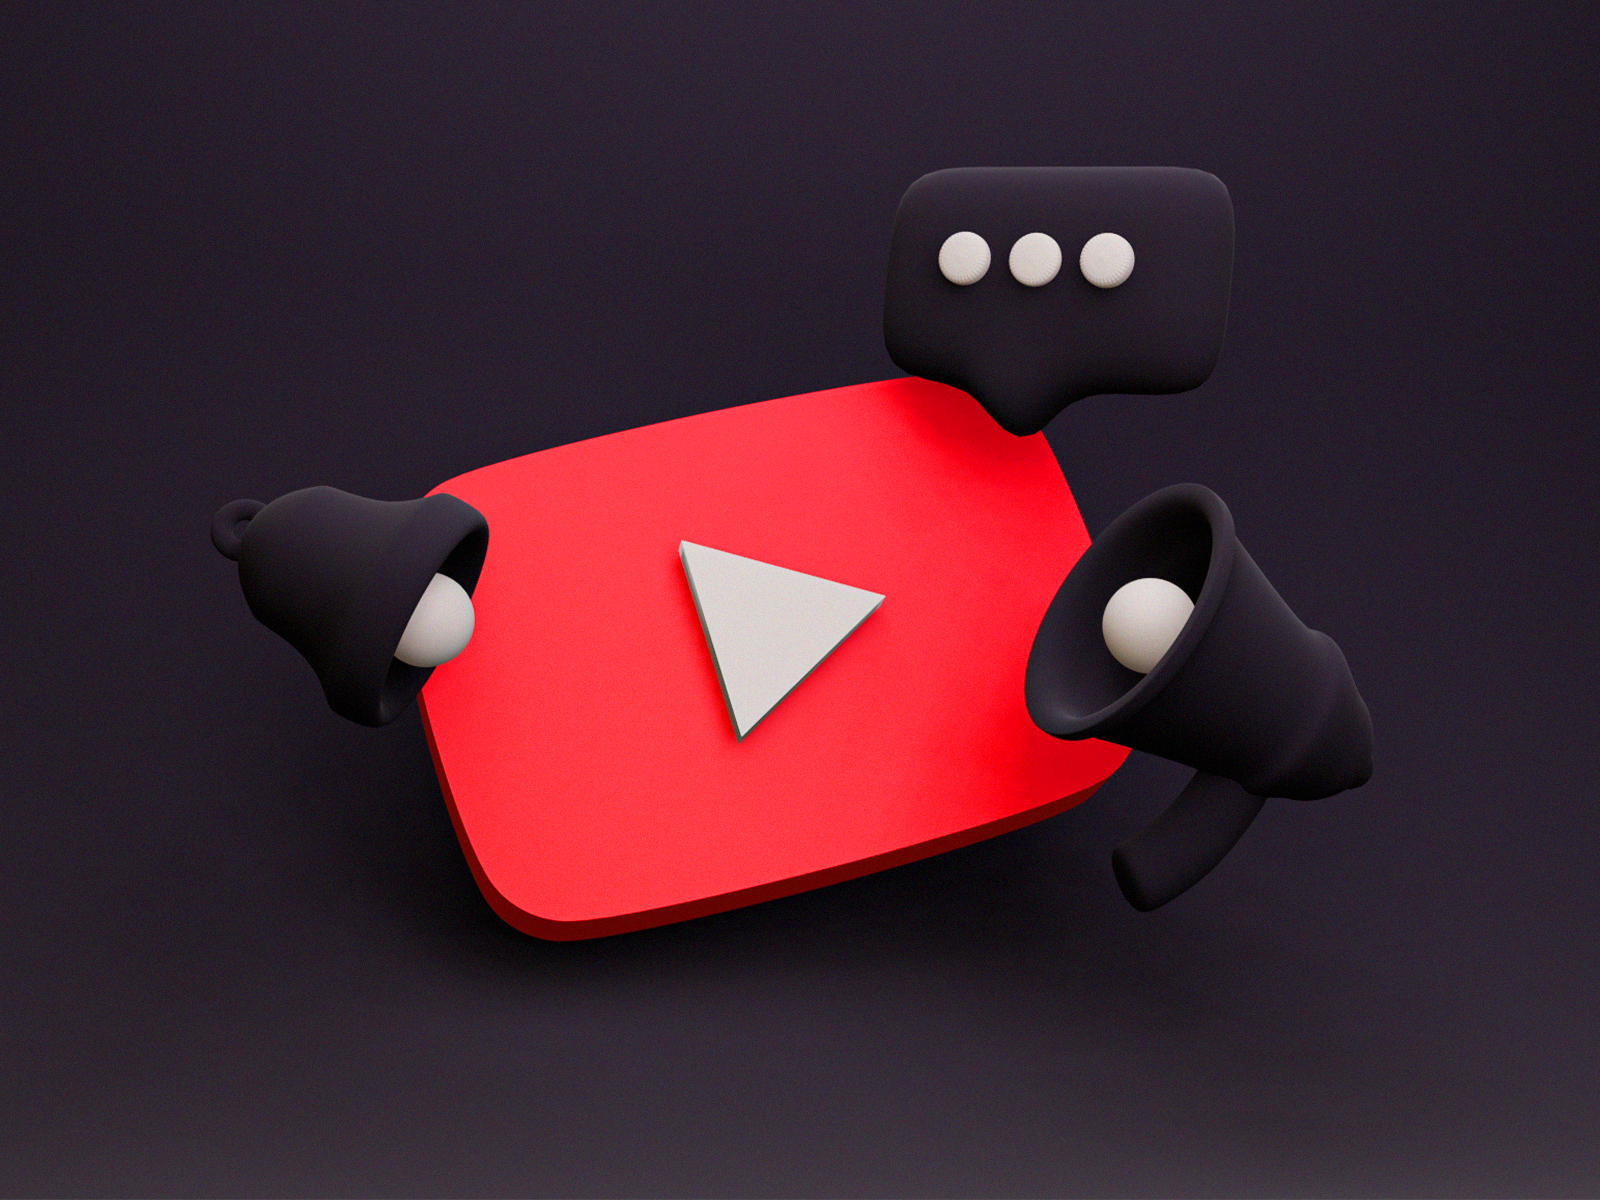 Youtube Logo 3d Free Blender Model By Marina Karatkevich For Abcdesign On Dribbble